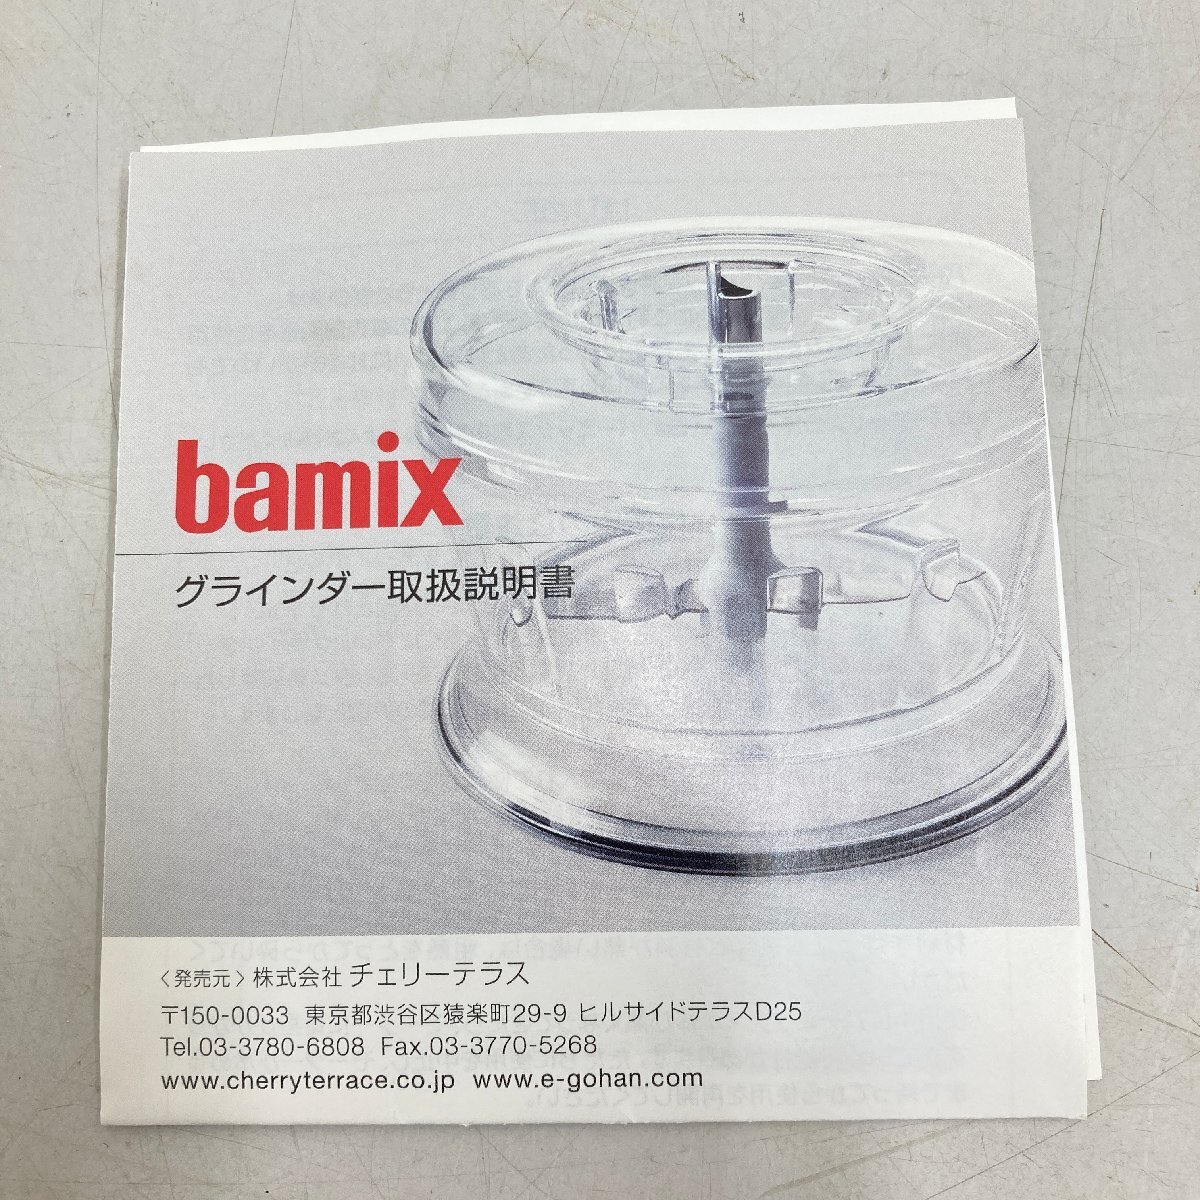 **[12] bamix bar Mix Attachment grinder unused operation not yet verification 06/031312m**